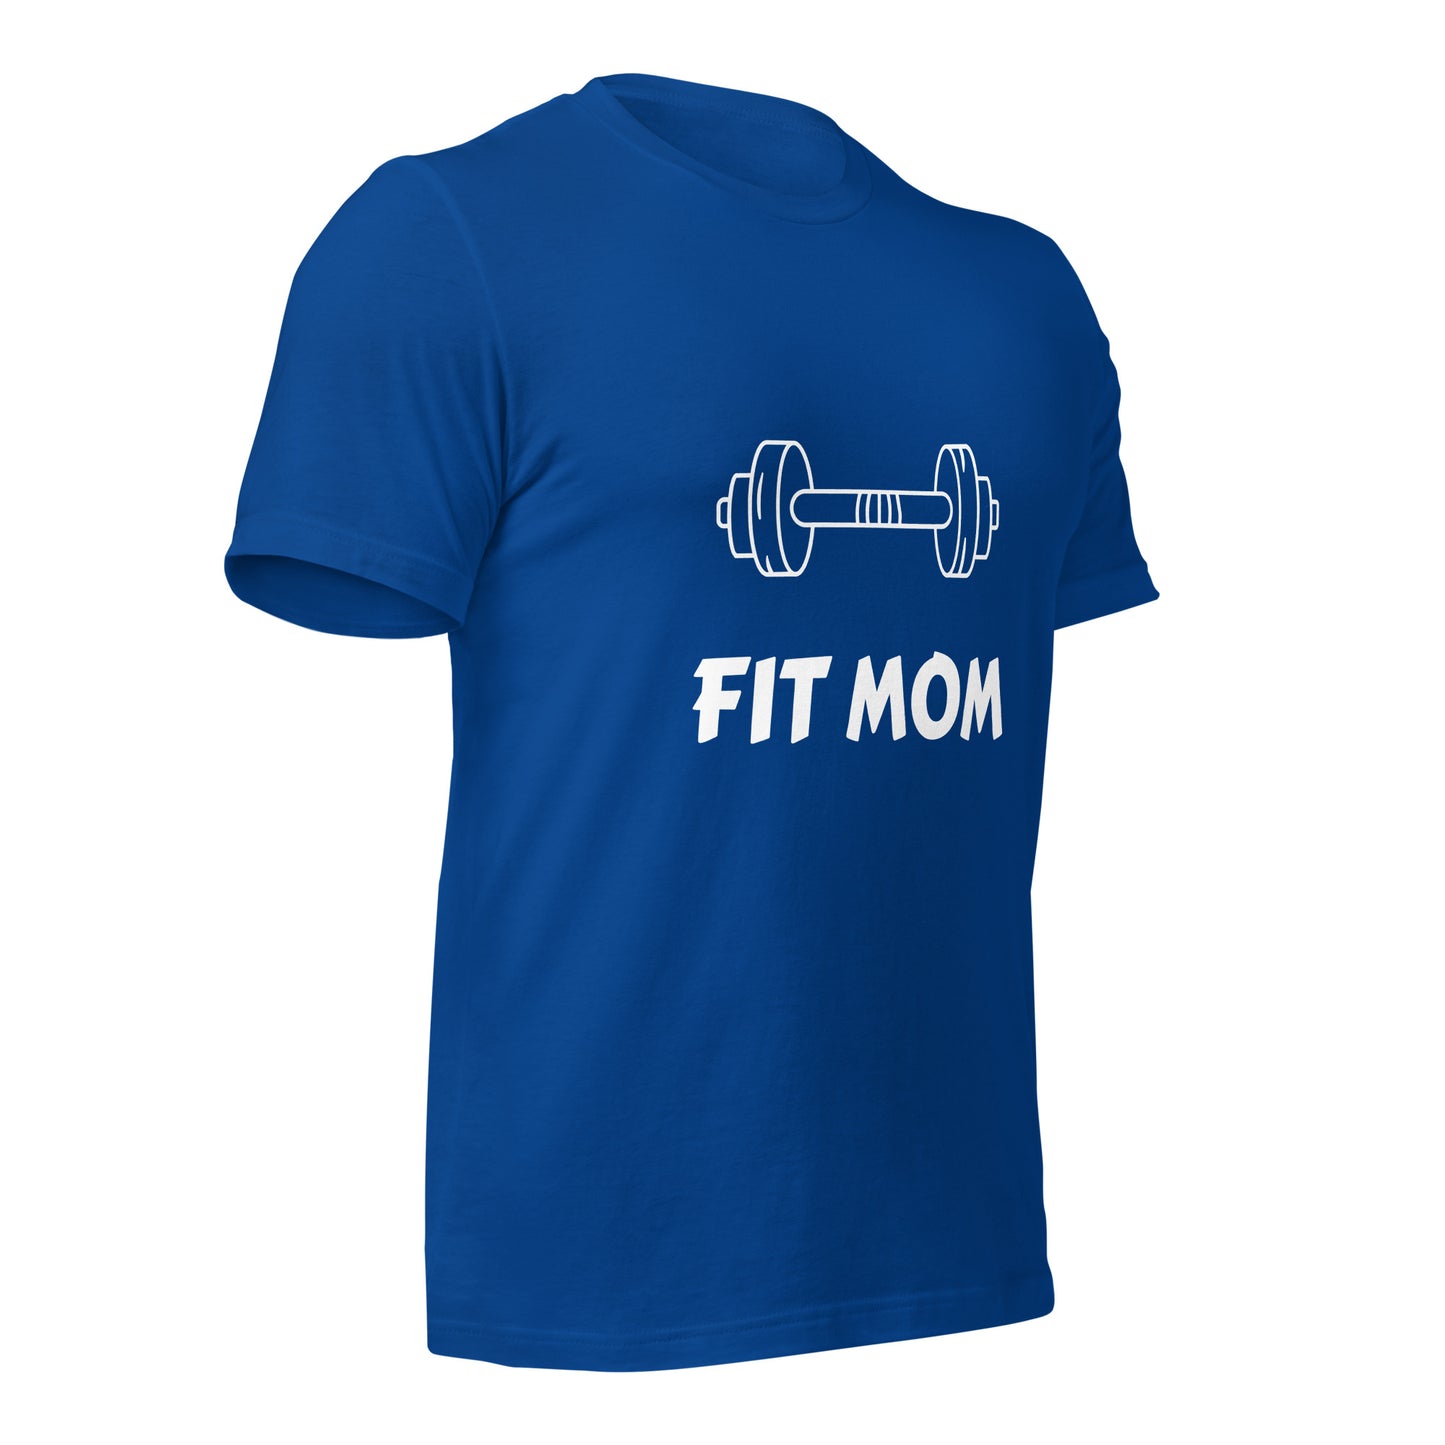 Fit Mom Printed T-shirt